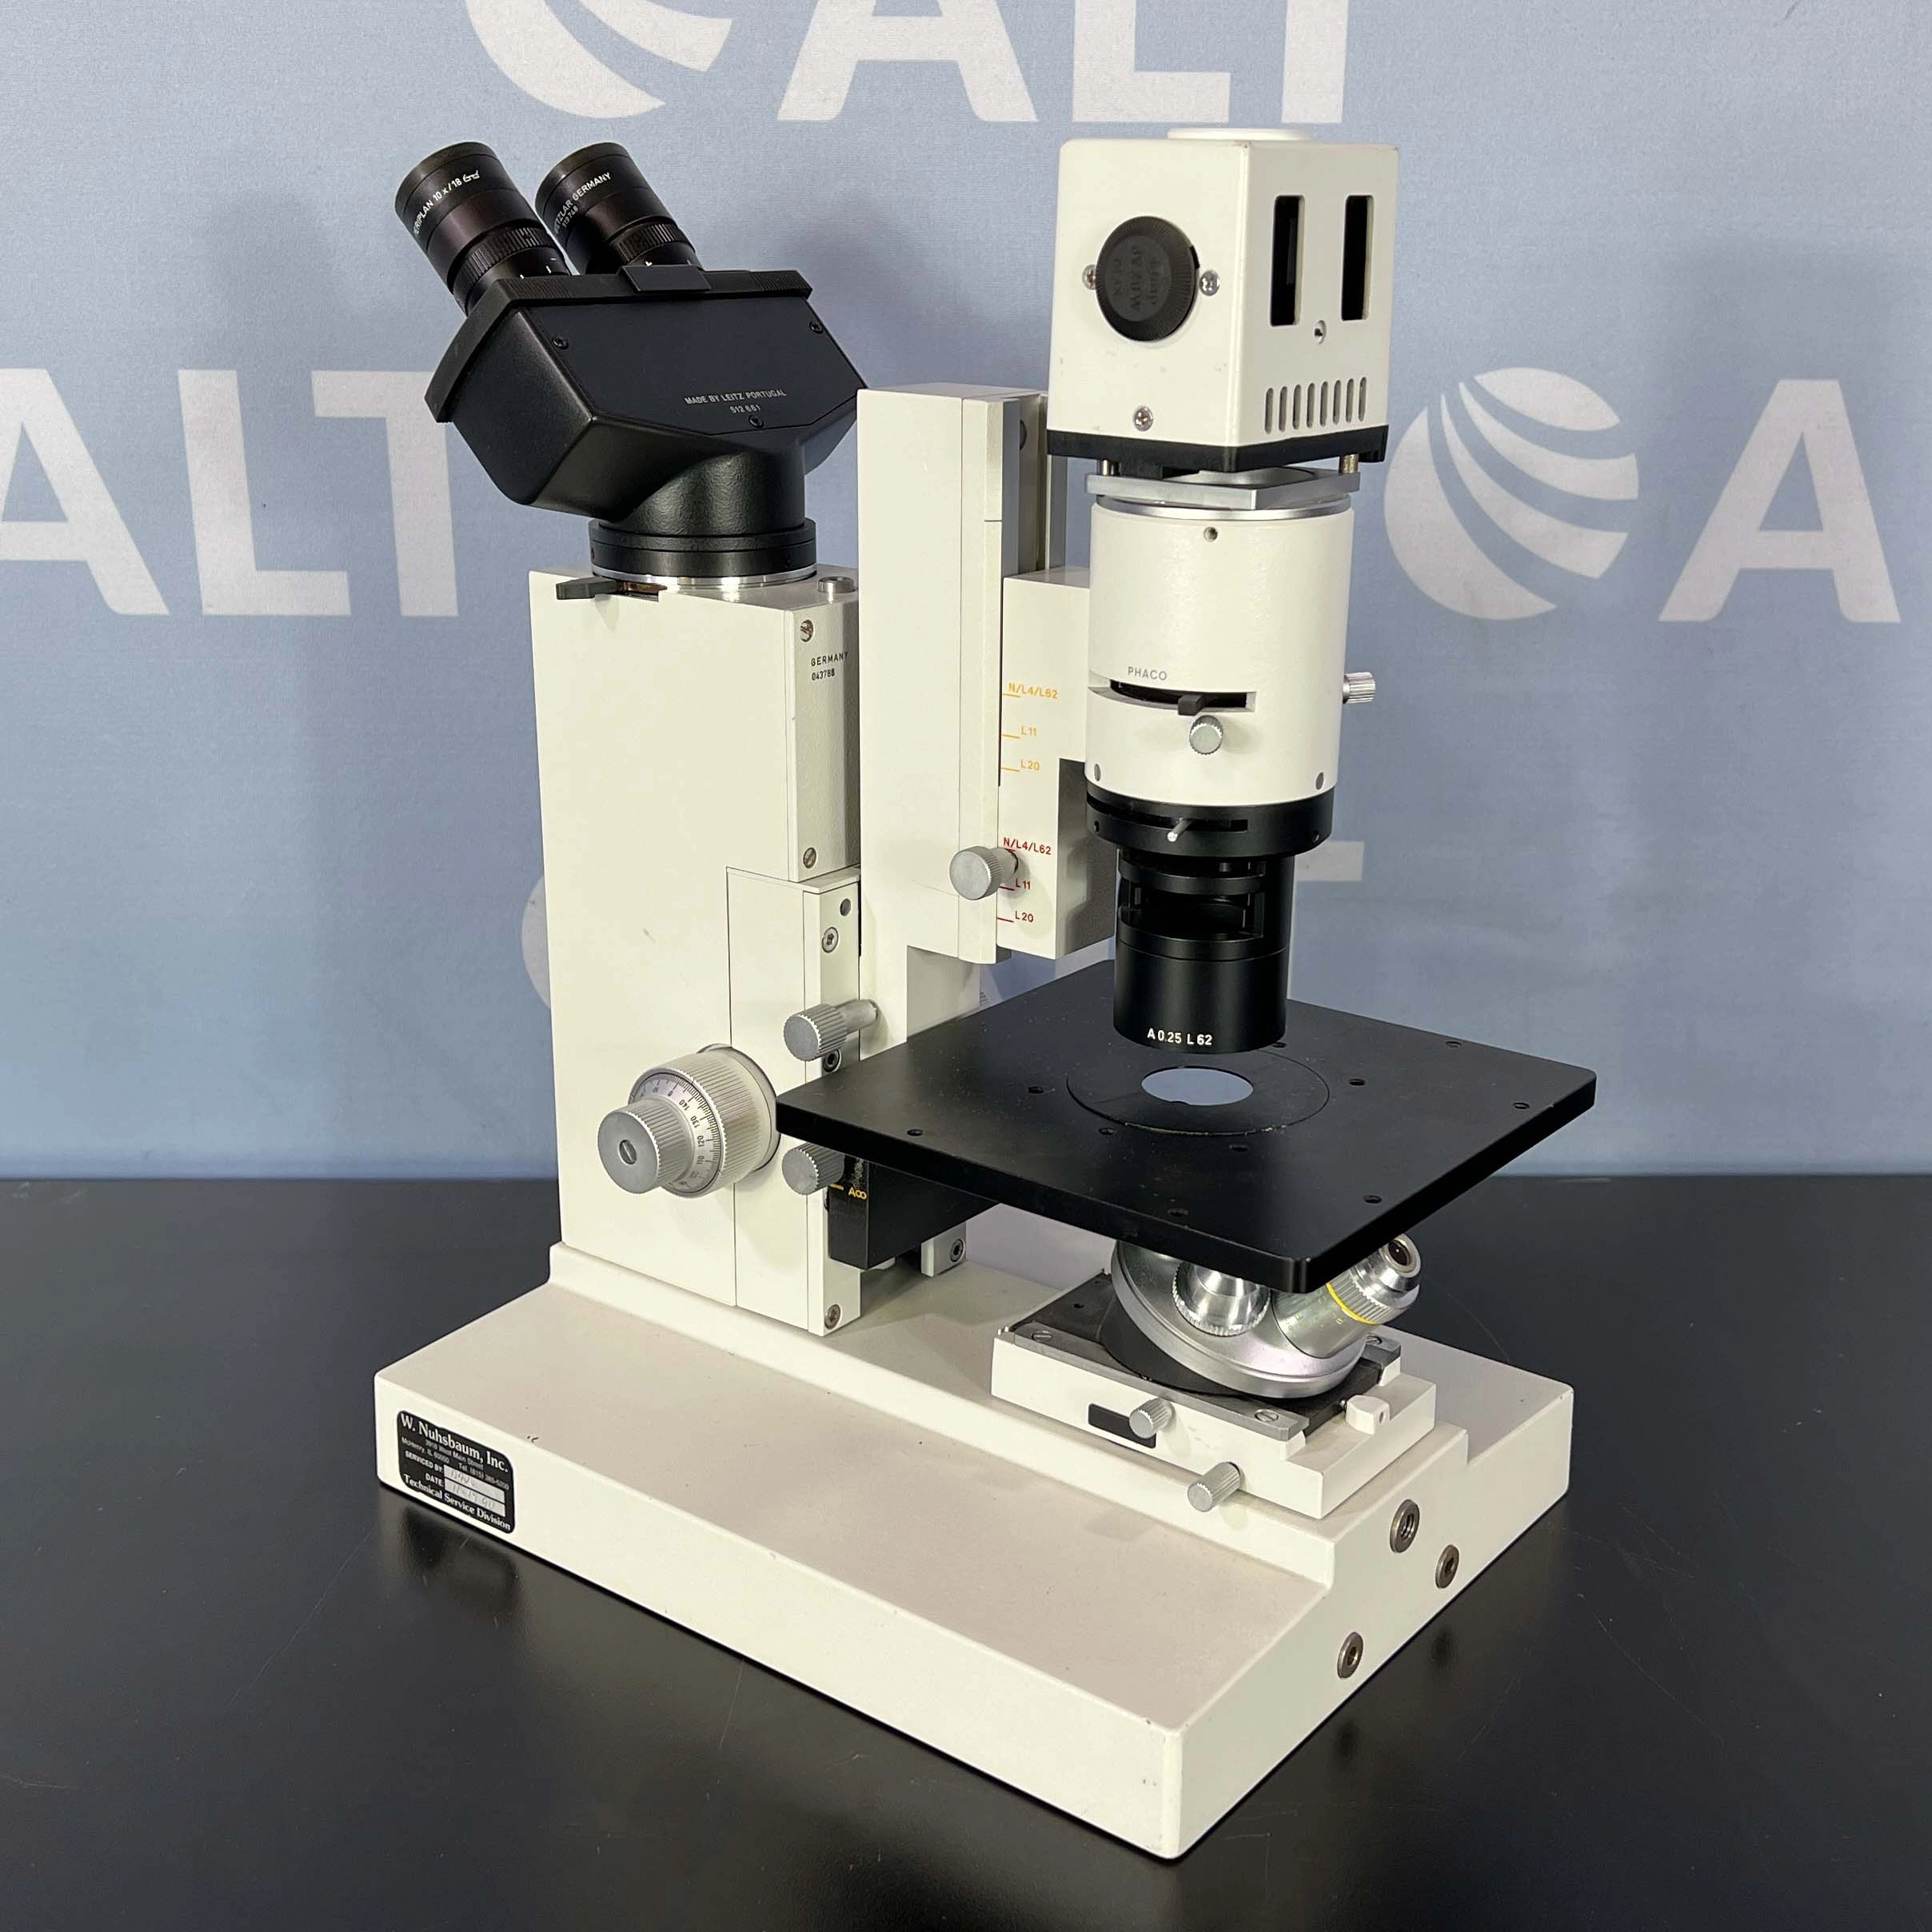 Leitz Diavert Inverted Research Microscope